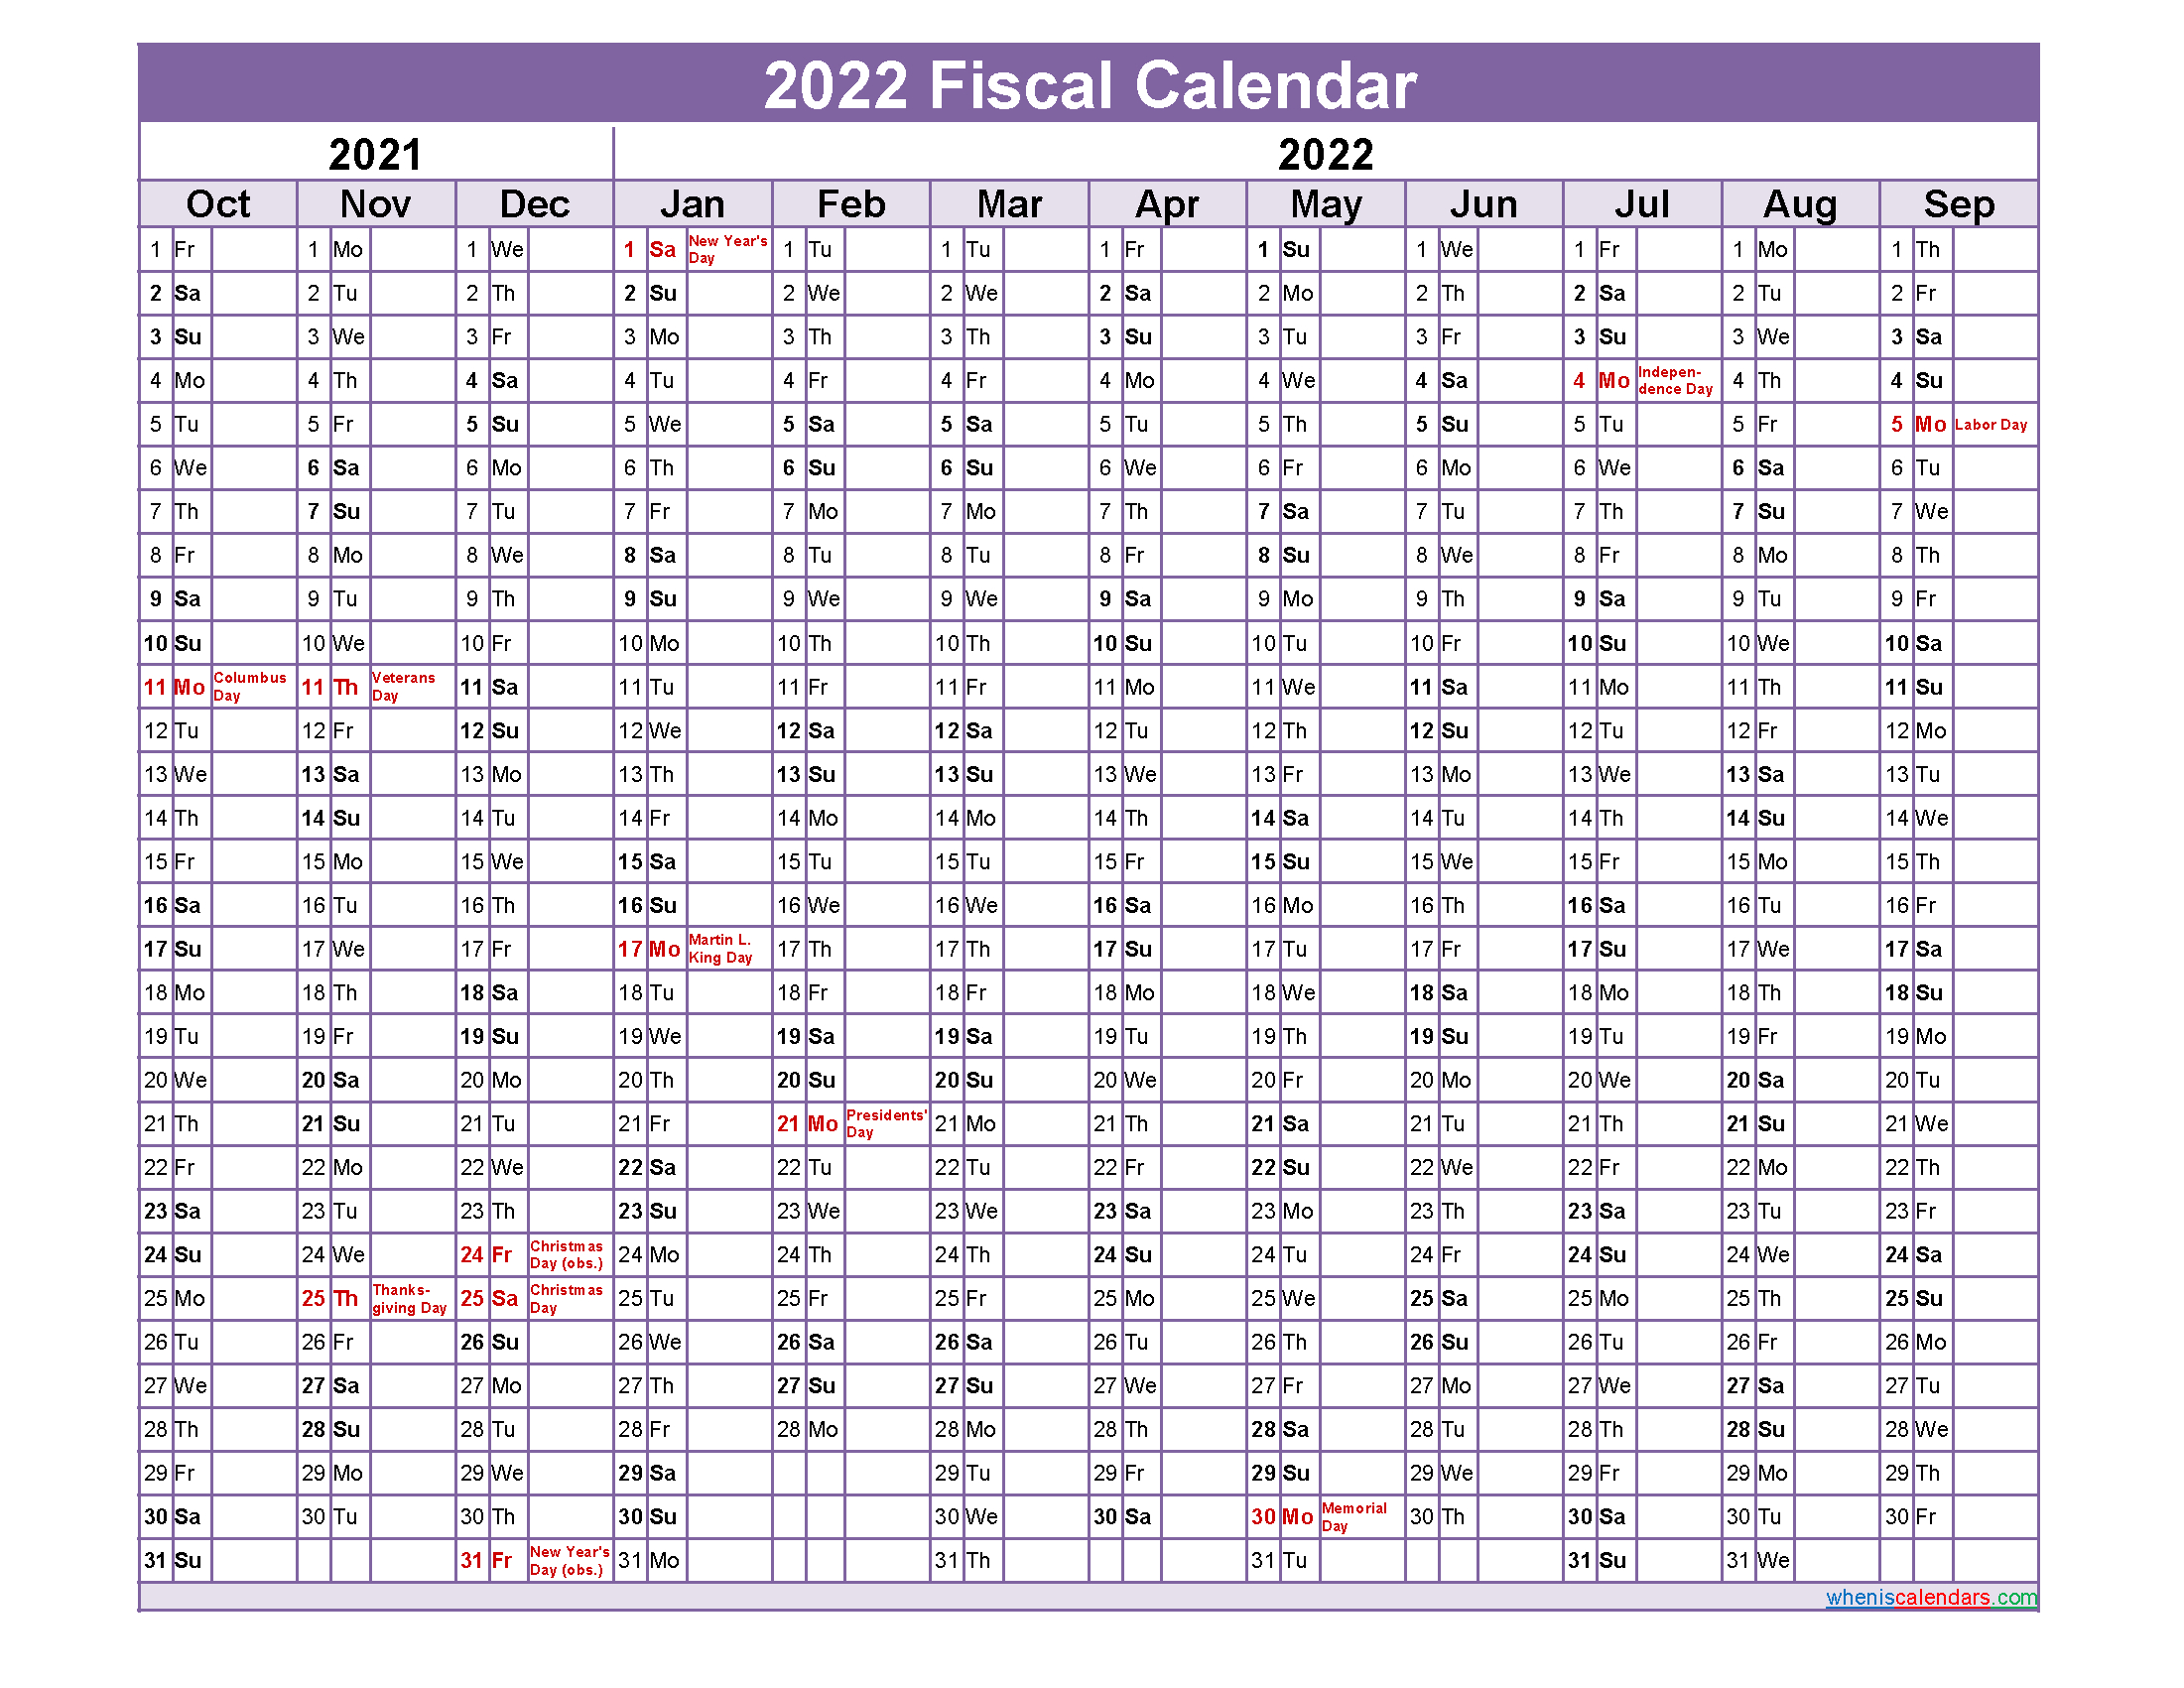 Federal Fiscal Year 2022 Calendar - Template No